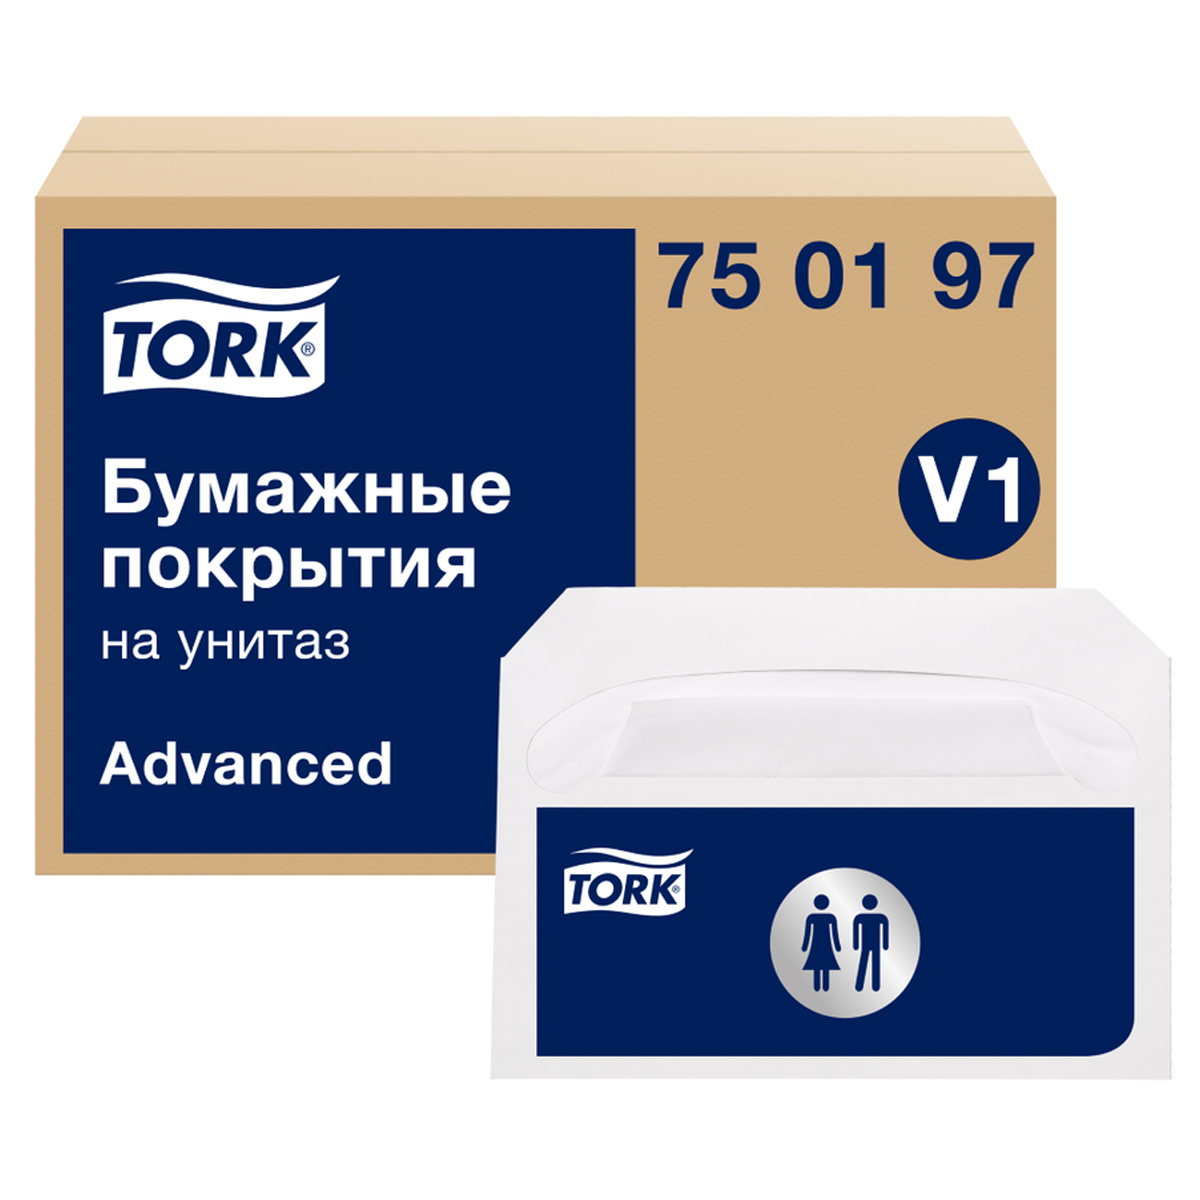 Одноразовые бумажные покрытия на унитаз Tork "Advanced" (V1), 250шт, белые